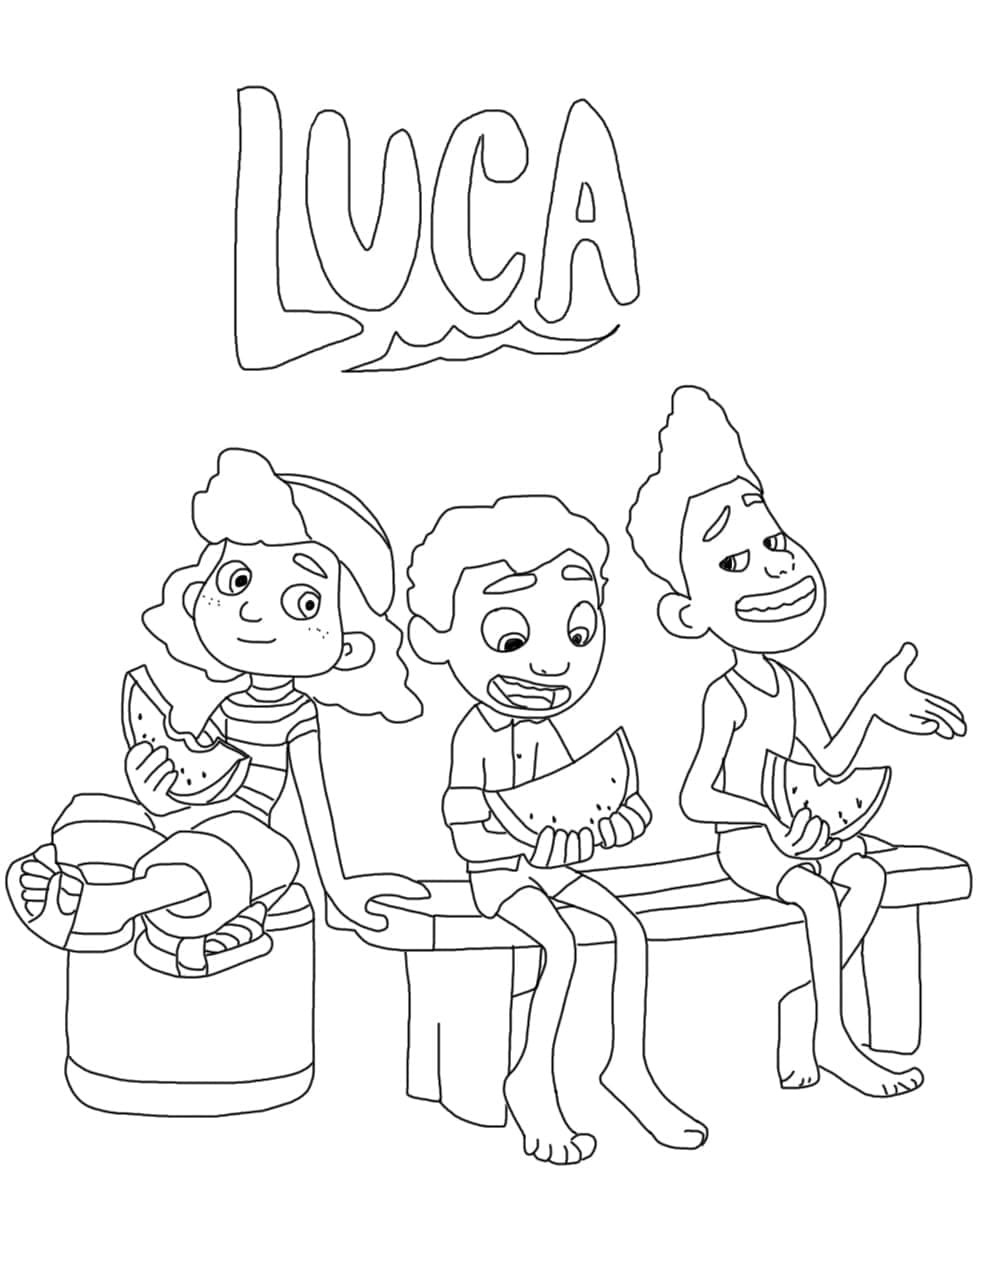 Giulia, Luca et Alberto coloring page